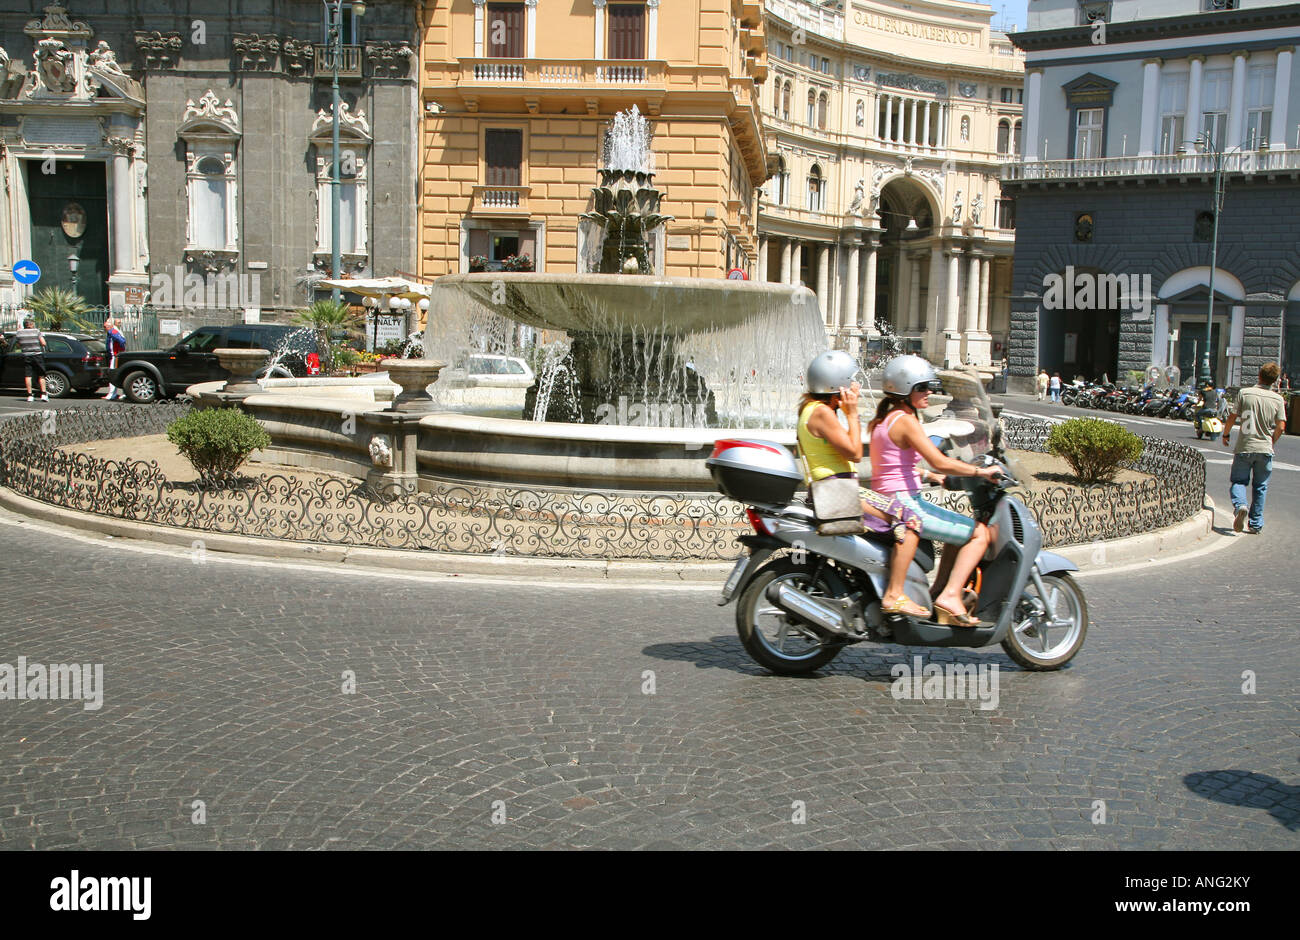 Naples italy scooter -Fotos und -Bildmaterial in hoher Auflösung – Alamy